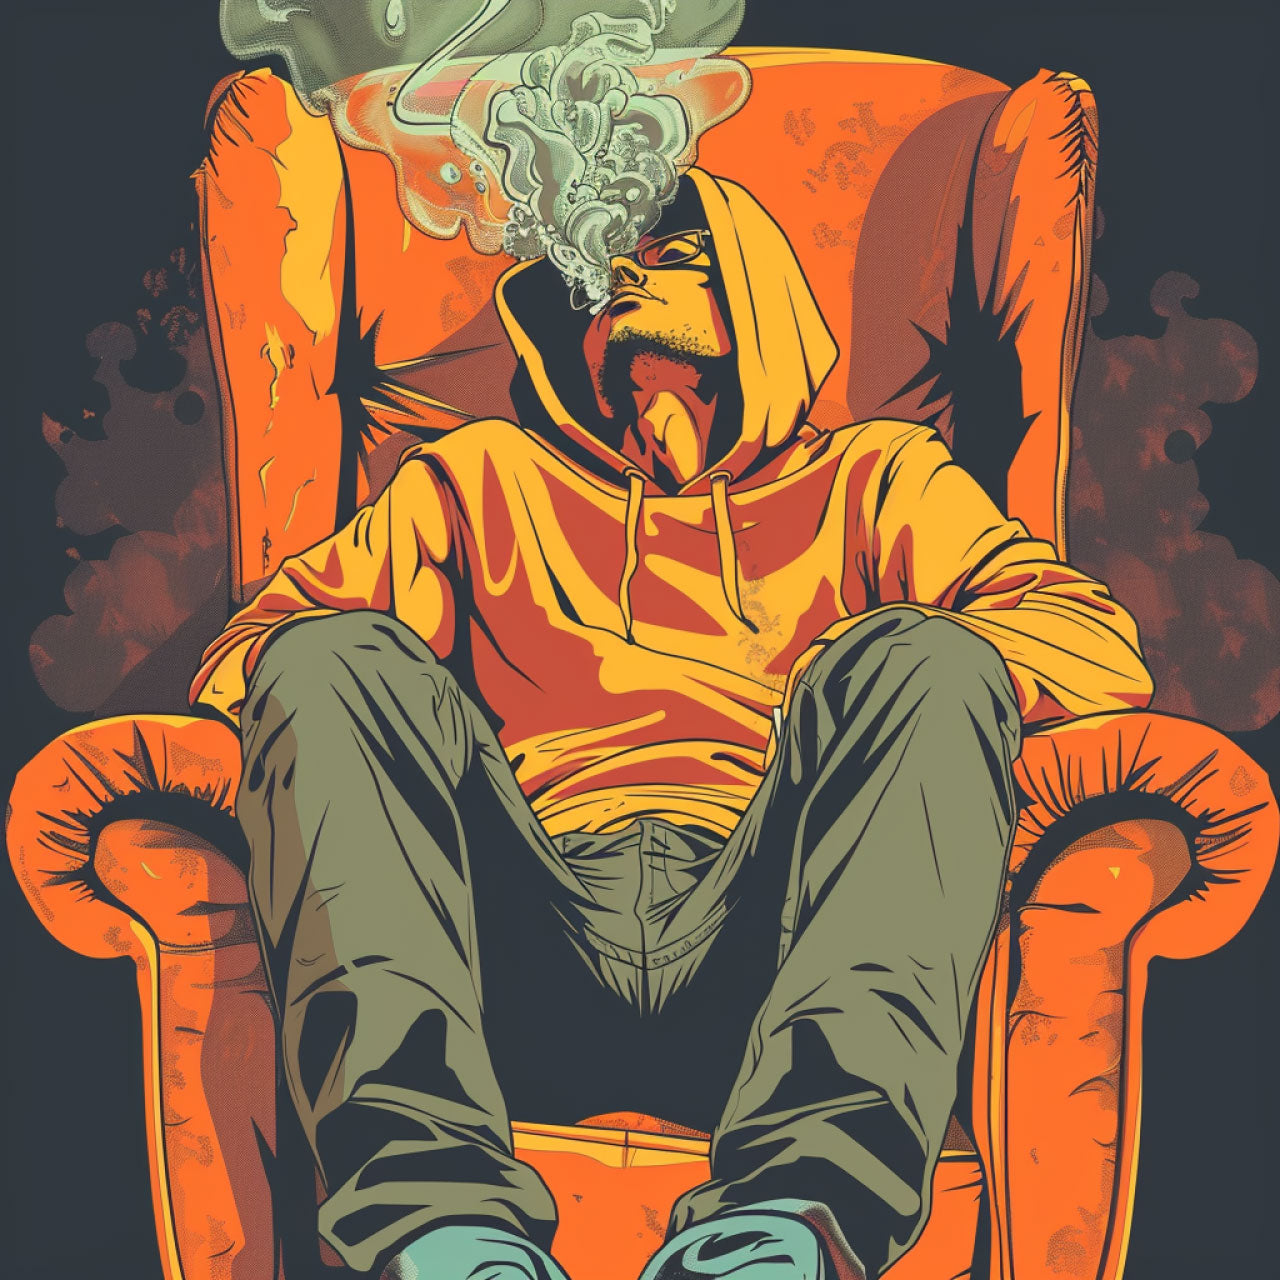 Cartoon style illustration of a man smoking cannabis.